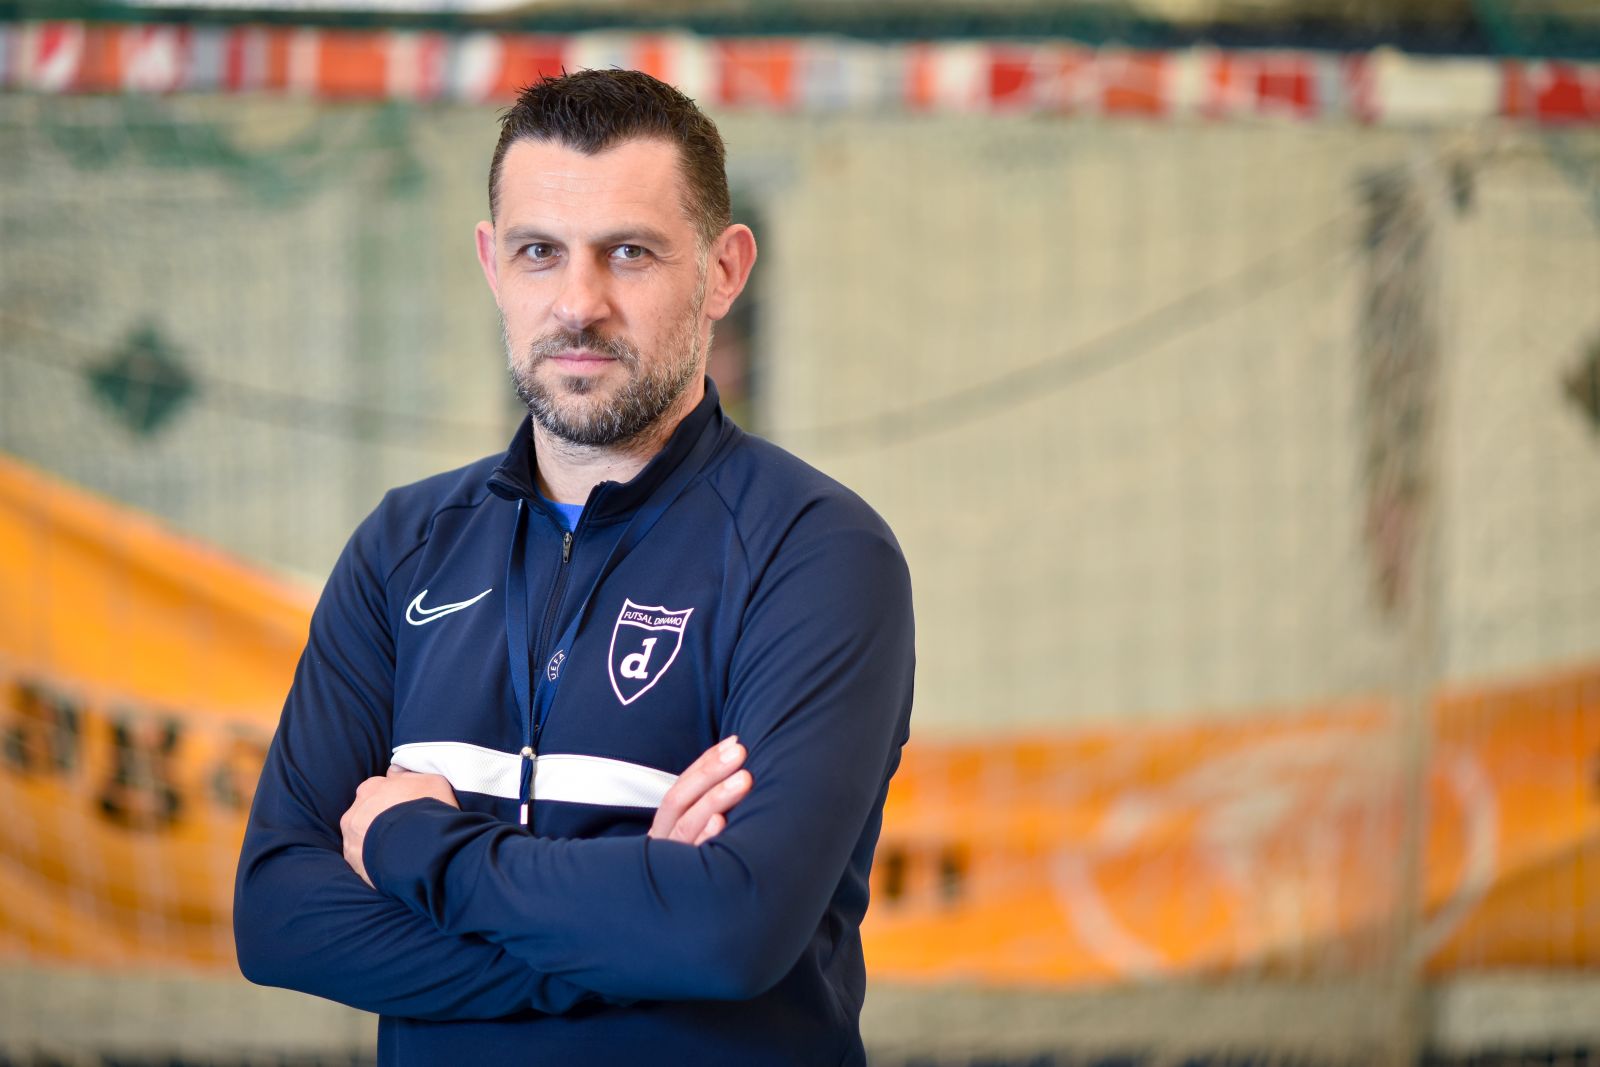 05.06.2023., Zagreb - Matija Dulvat, trener futsal kluba Dinamo. 

Photo Sasa ZinajaNFoto